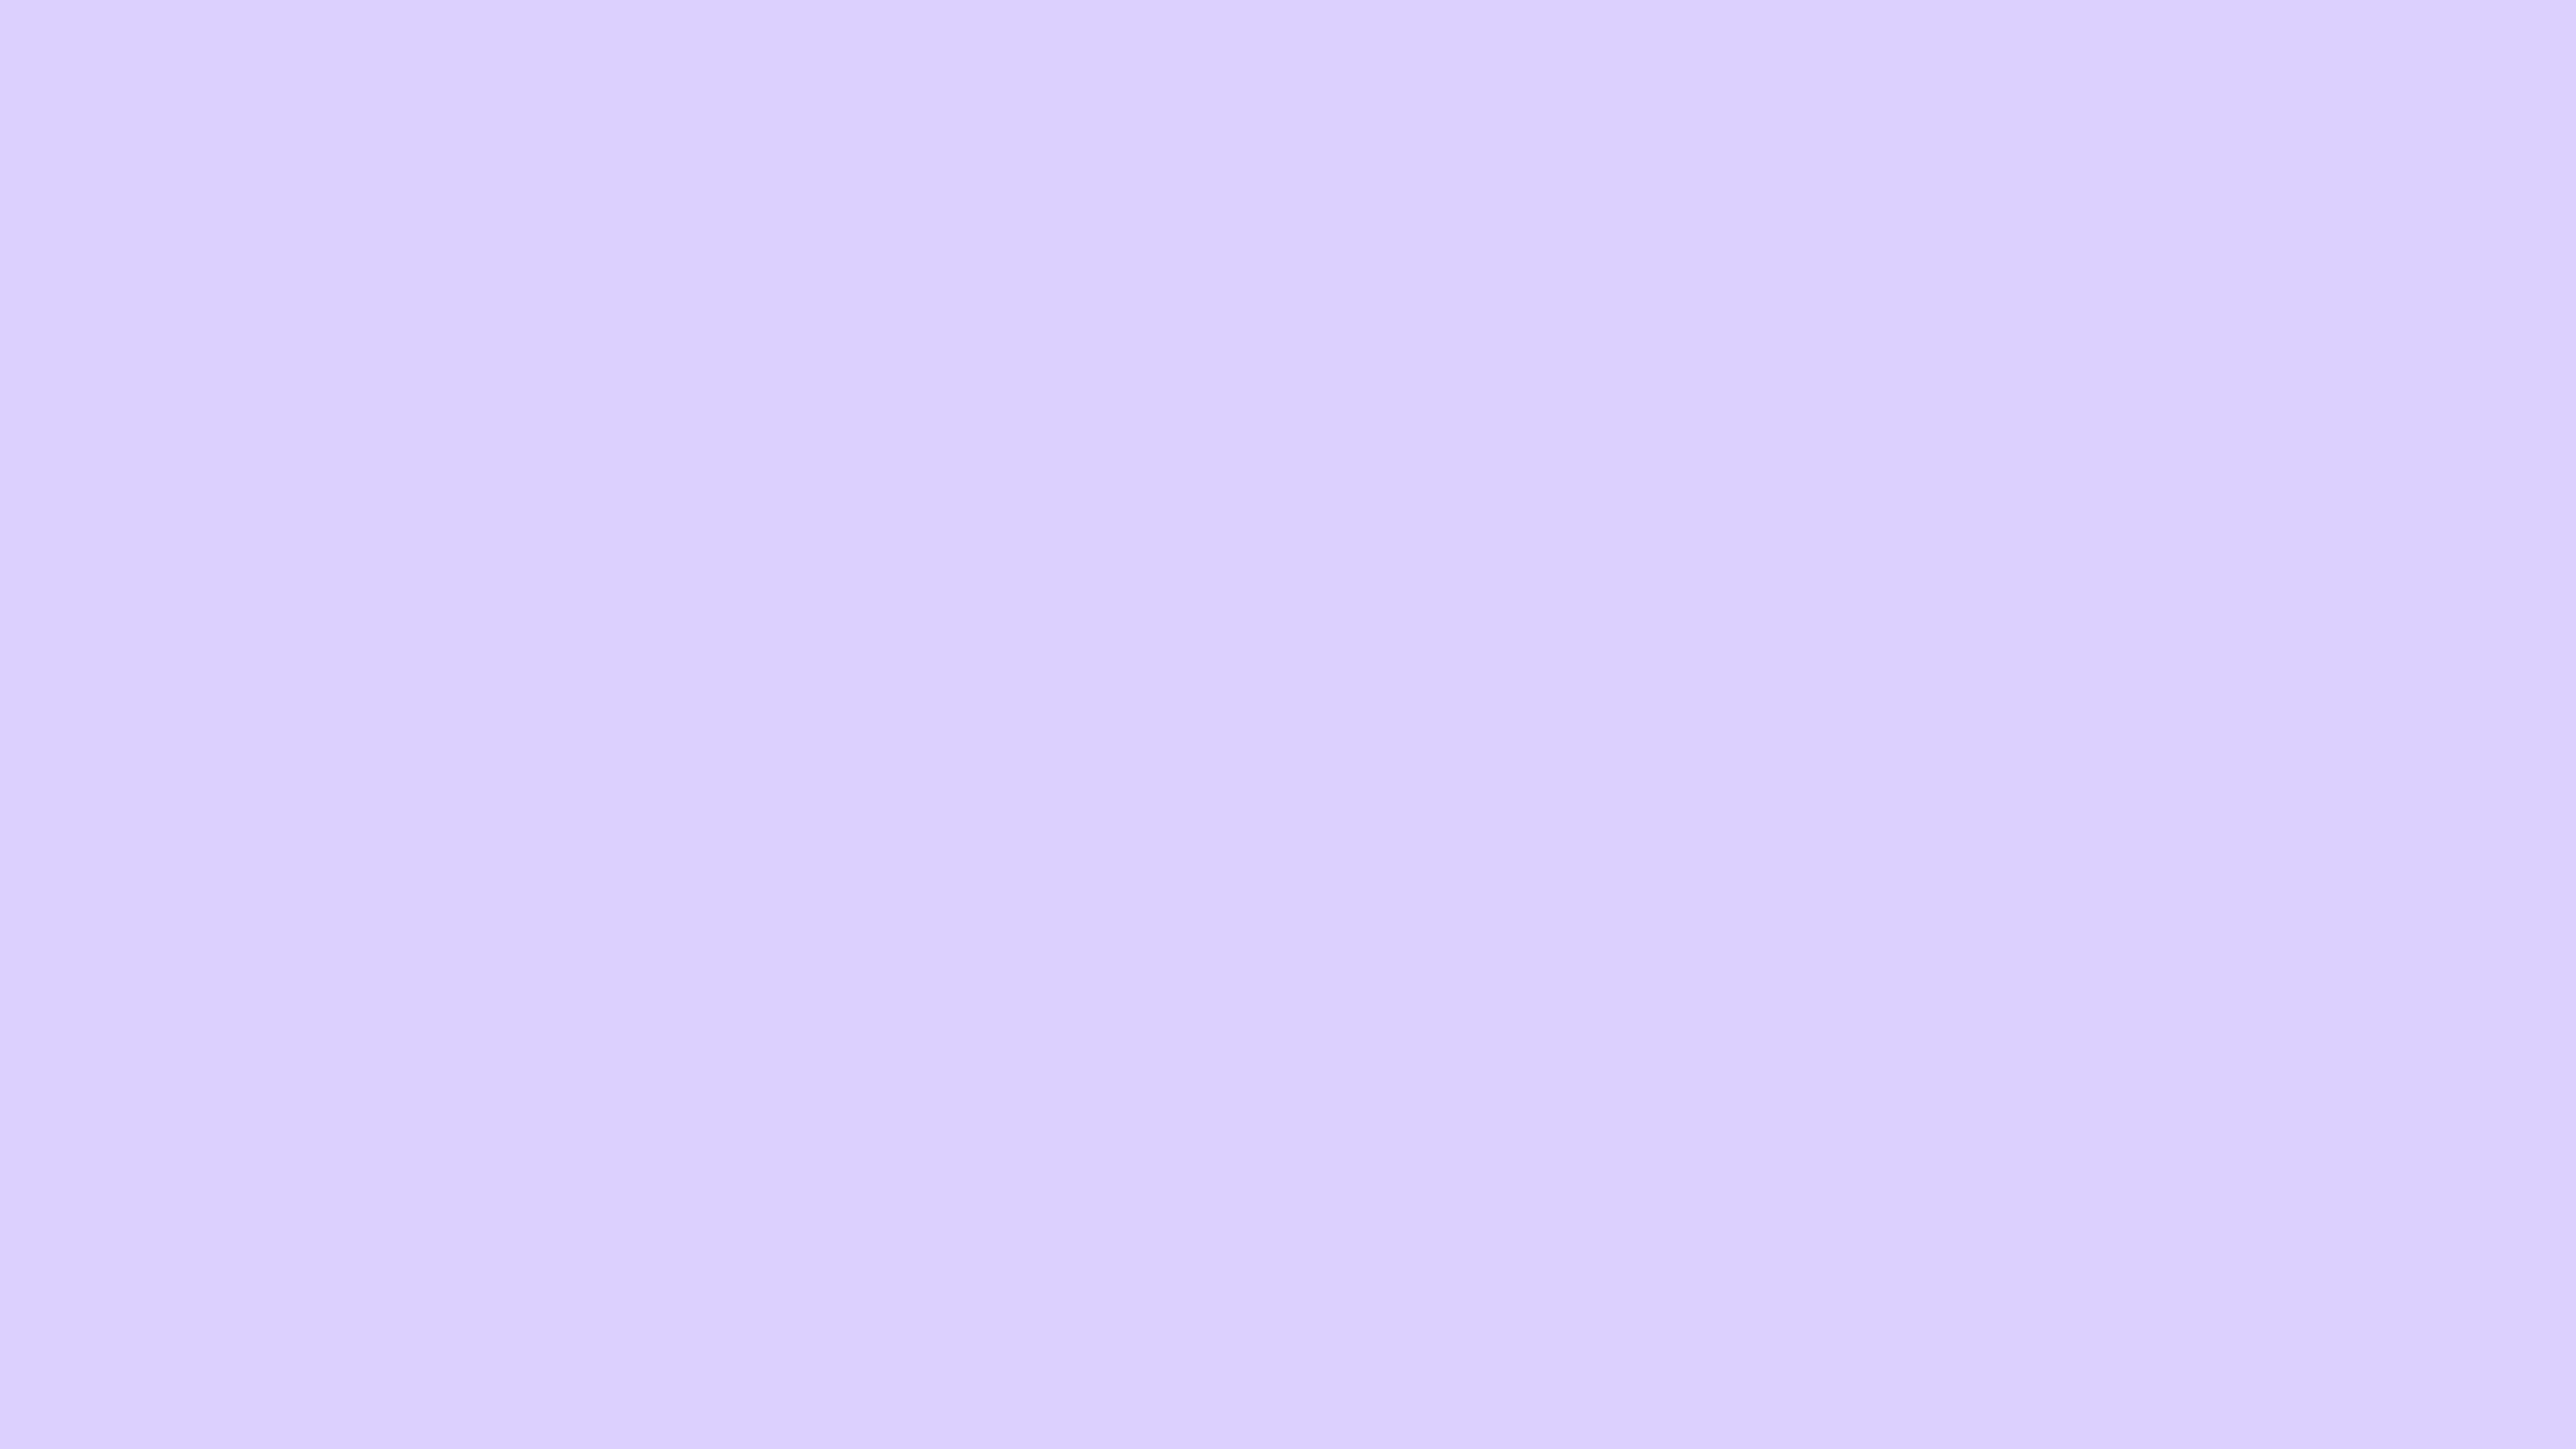 4096x2304 Pale Lavender Solid Color Background